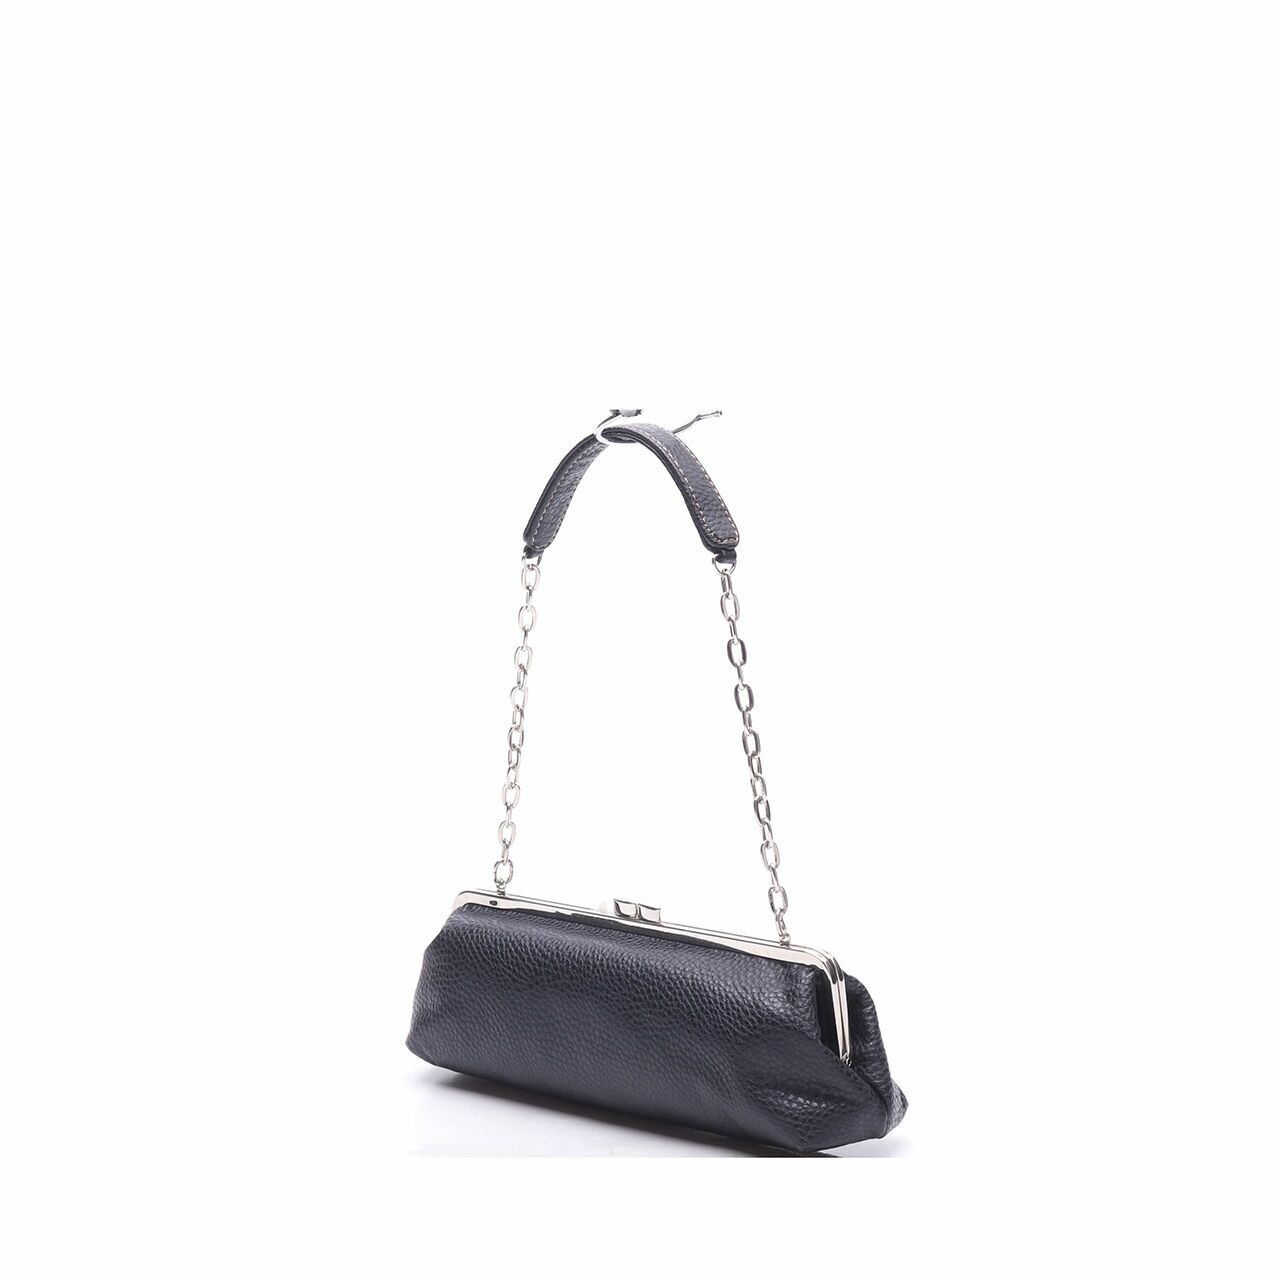 Perllini Black Handbag